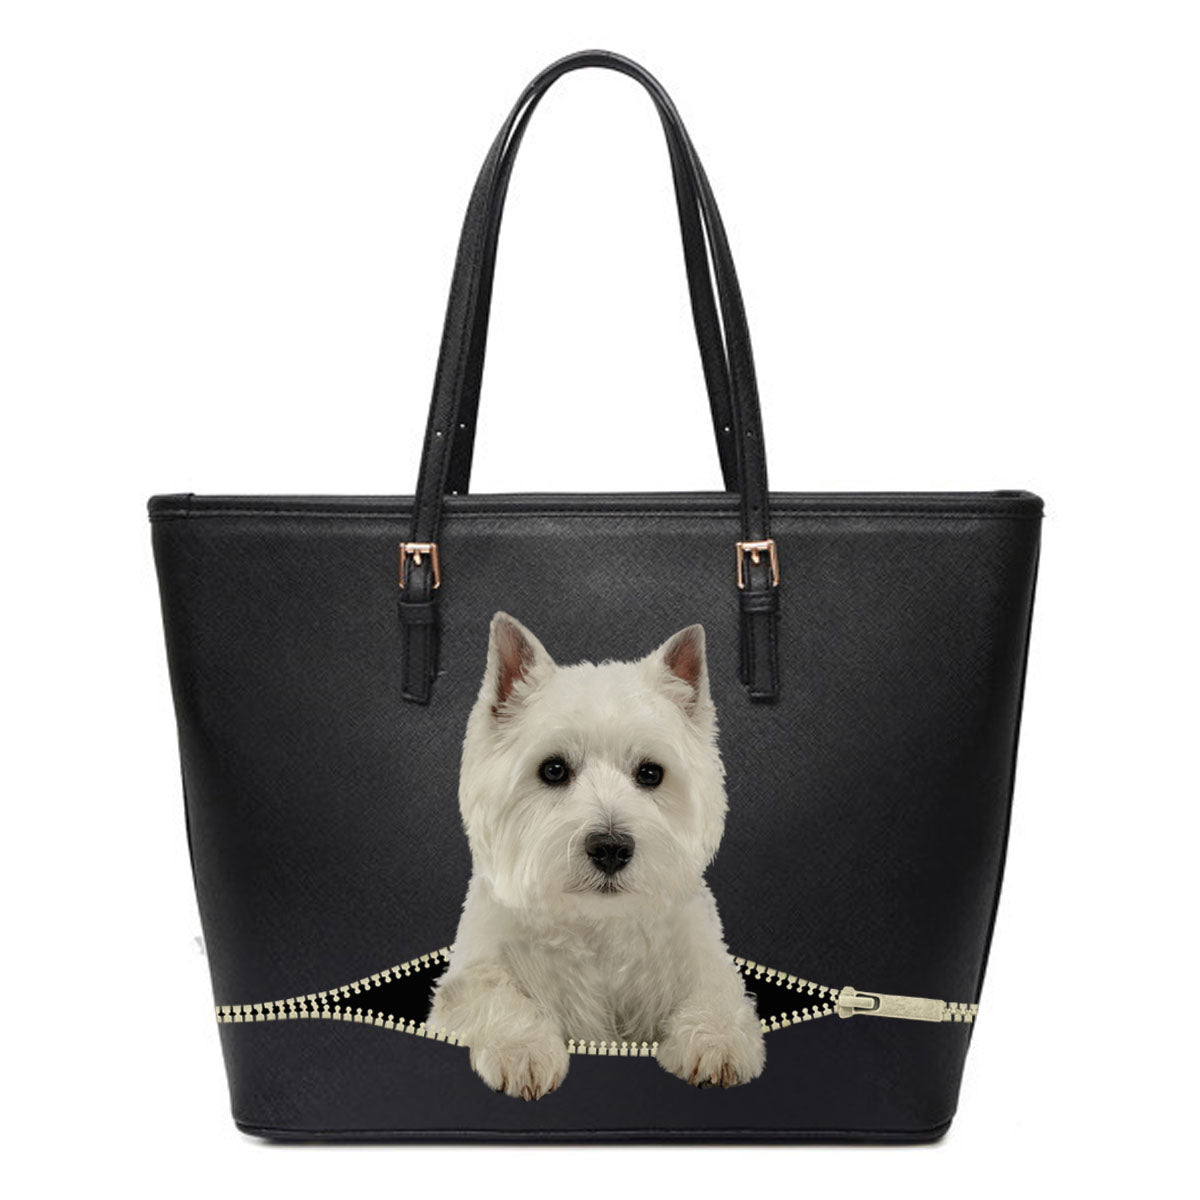 West Highland White Terrier Tote Bag V1